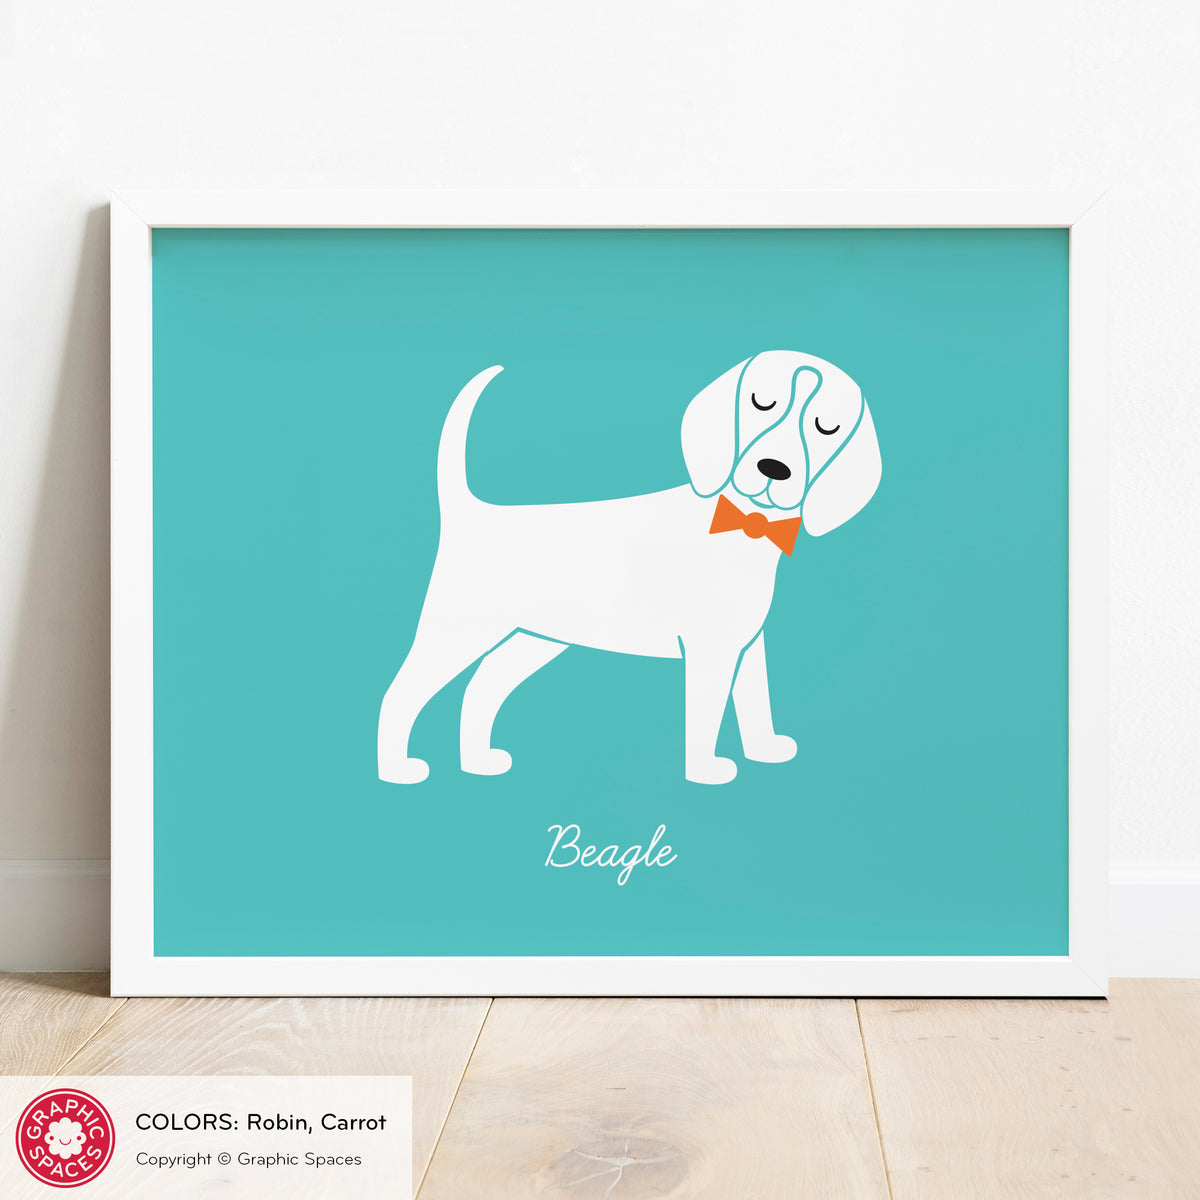 Beagle nursery art print, personalized.